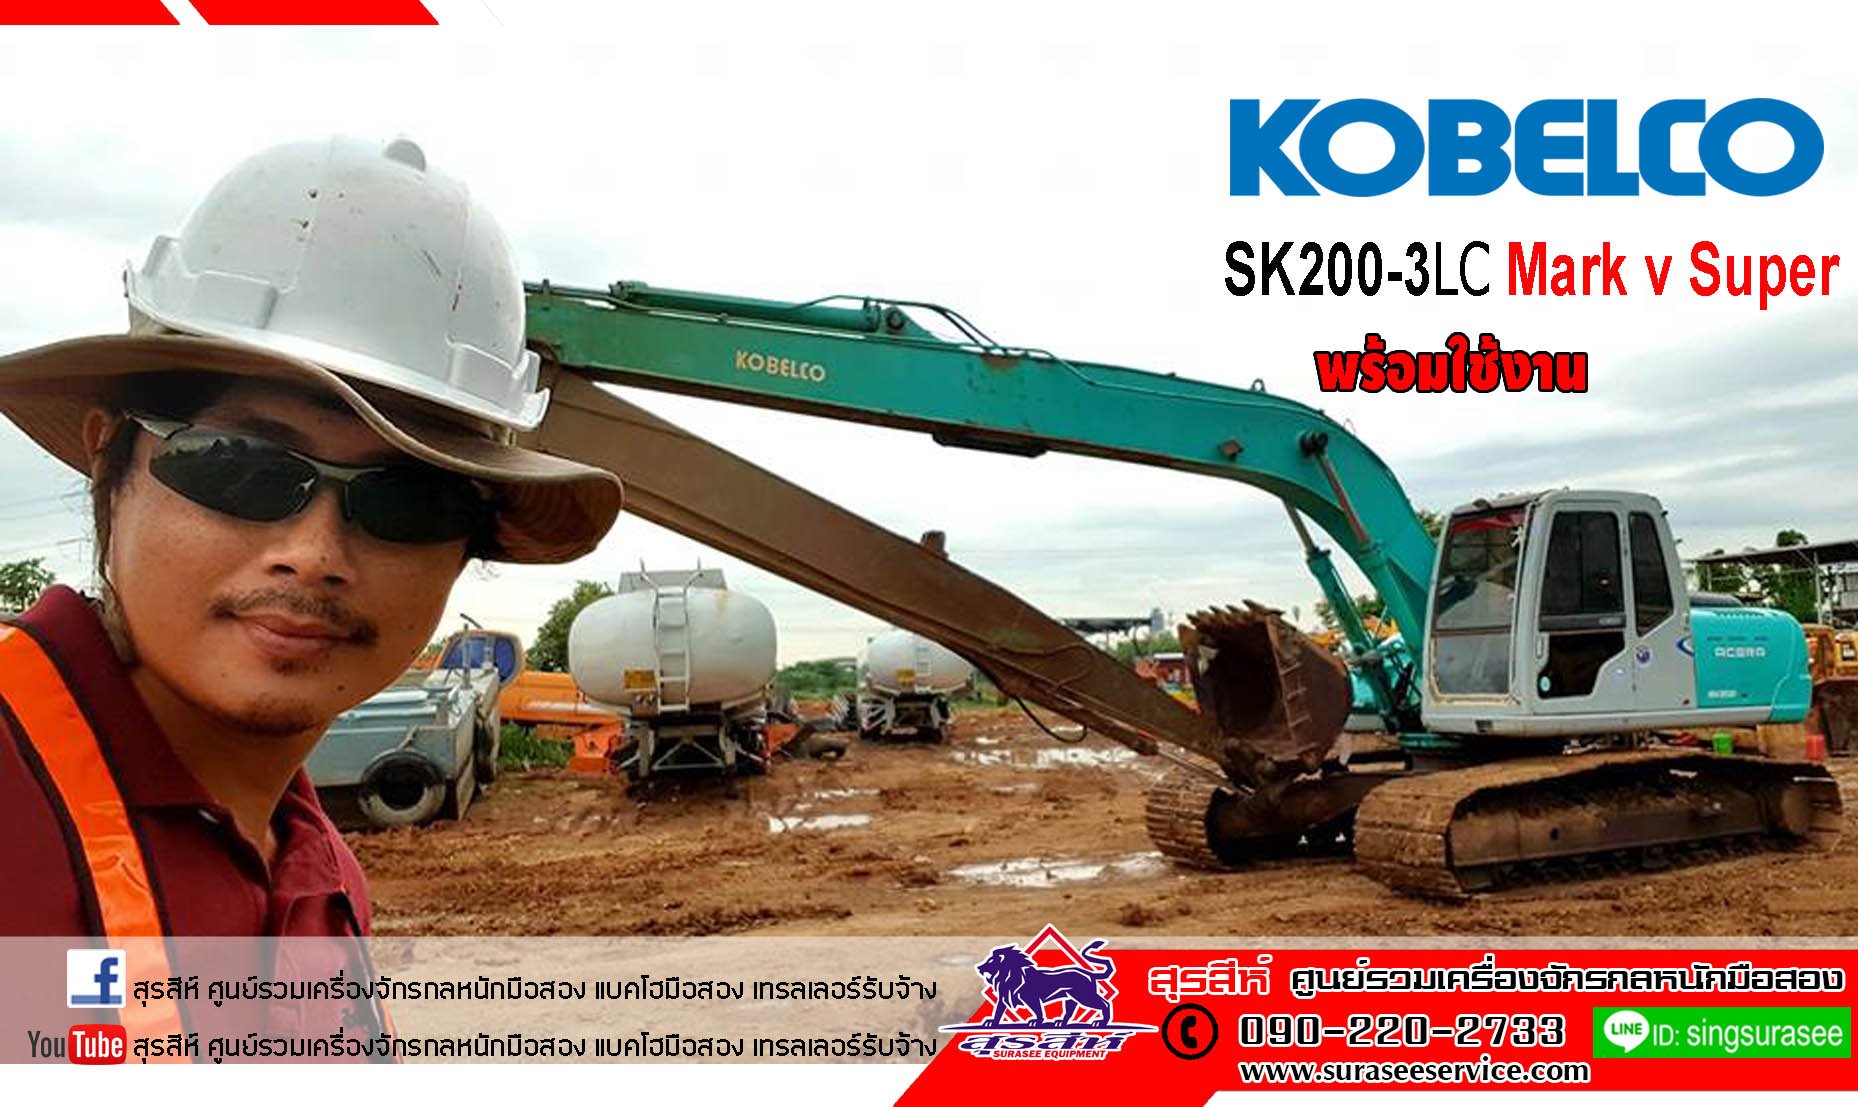 KOBELCO SK200LC-3 Mark V Super บูมยาว 16 เมตร สภาพดี พร้อมใช้งาน